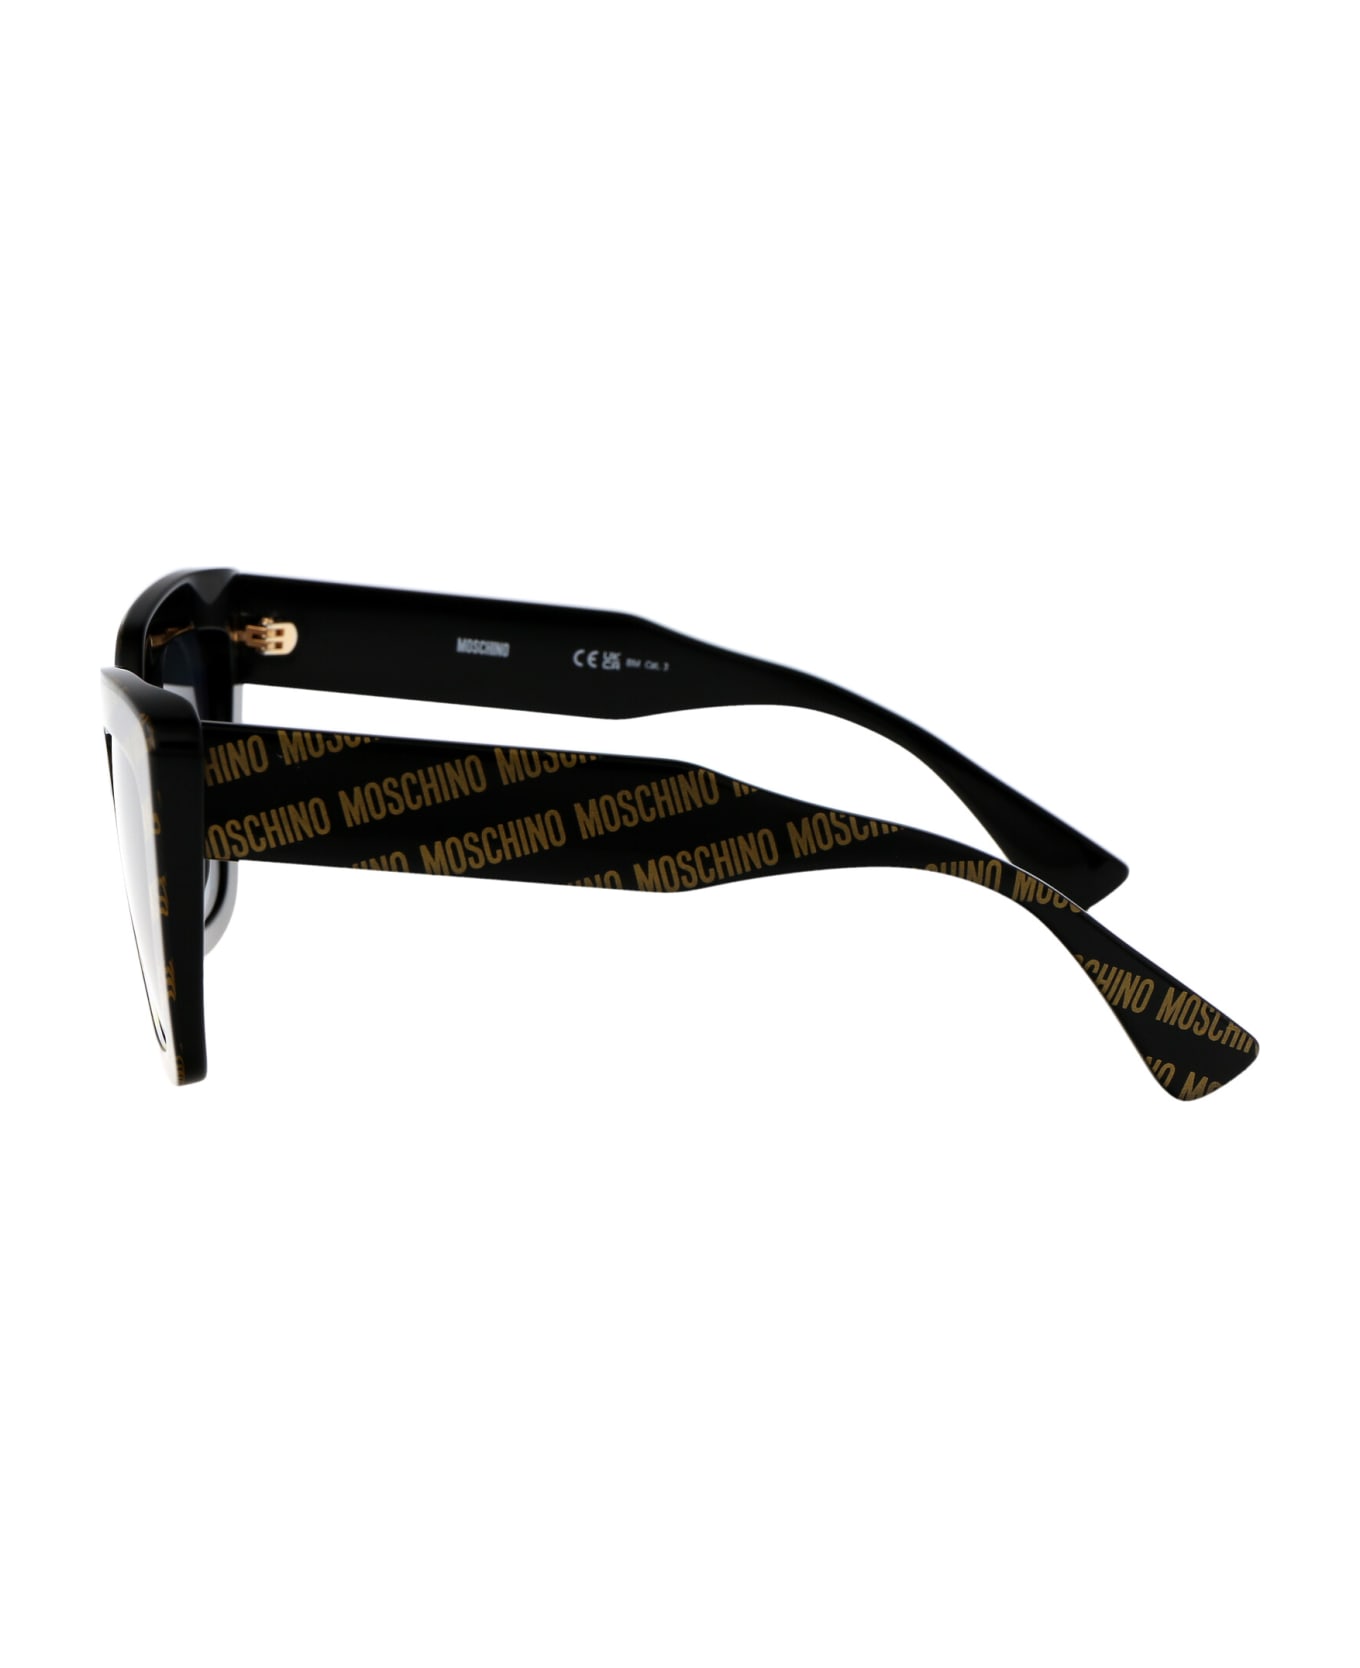 Moschino Eyewear Mos148/s Sunglasses - 7RM9O PATTERN NERO